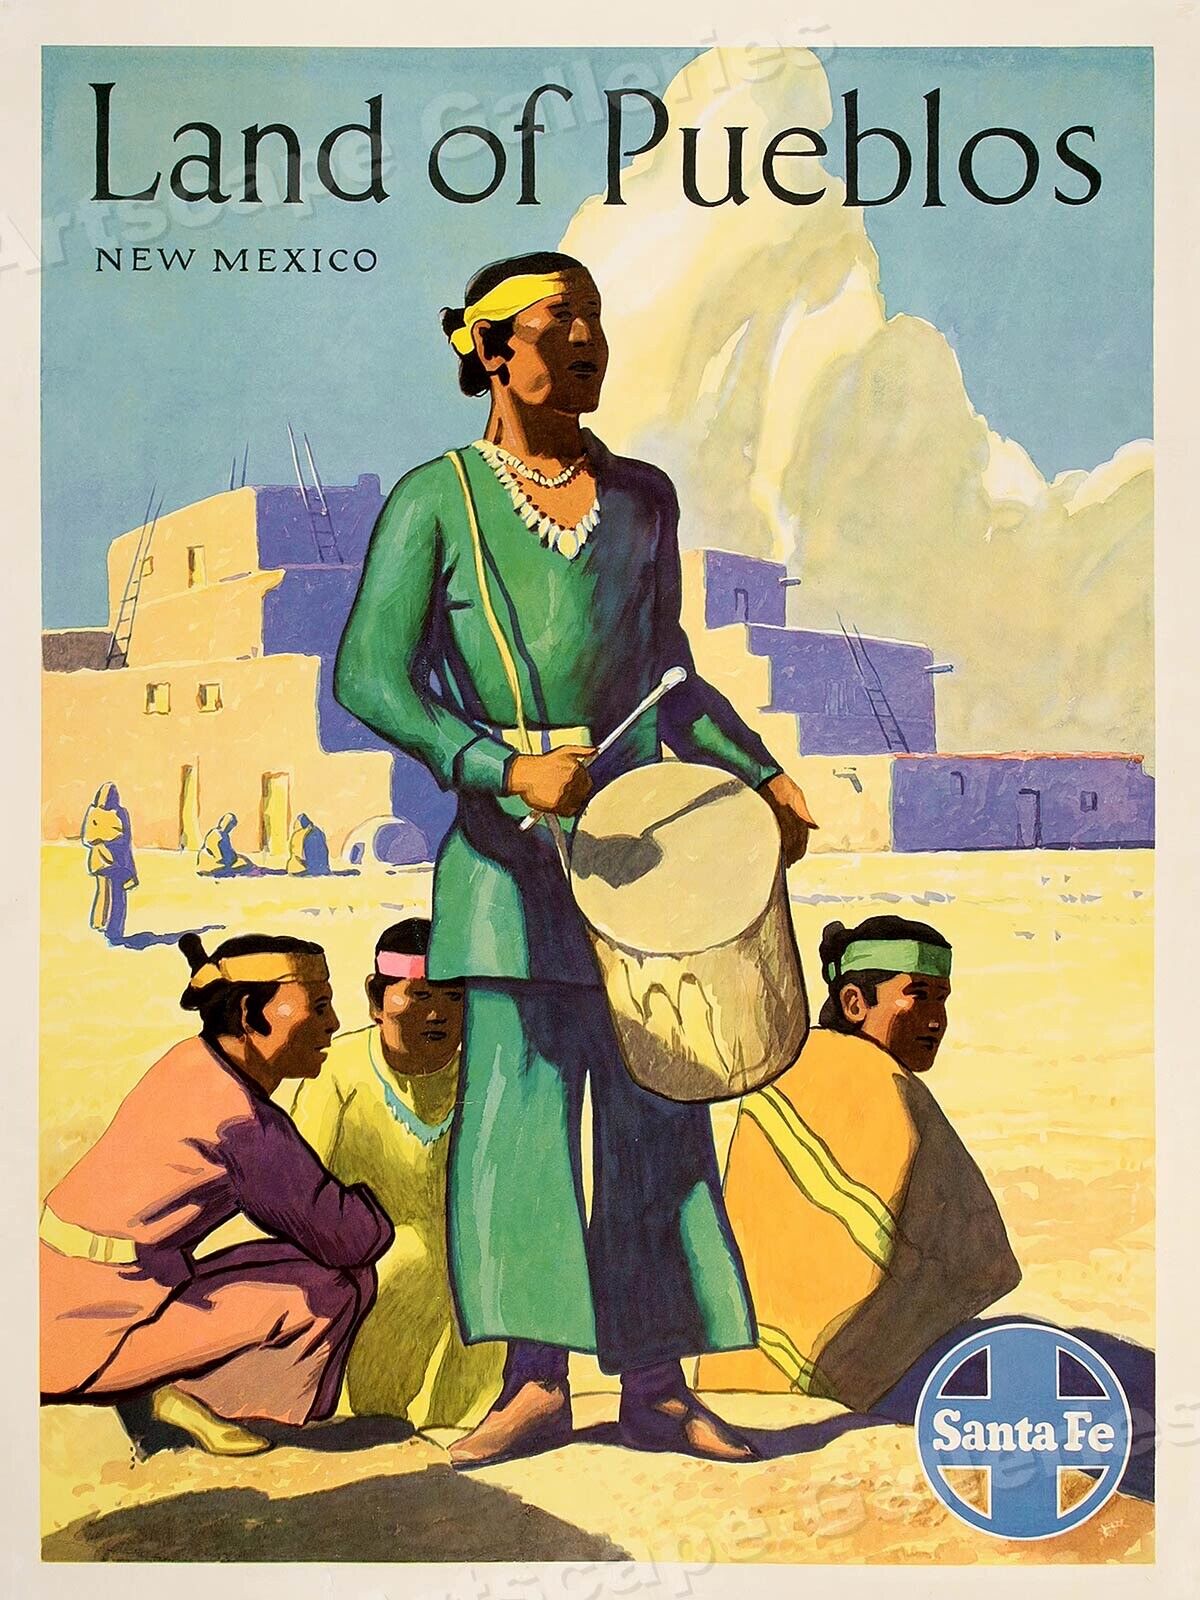 1950s Santa Fe Land of Pueblos New Mexico Vintage Style Travel Poster - 18x24